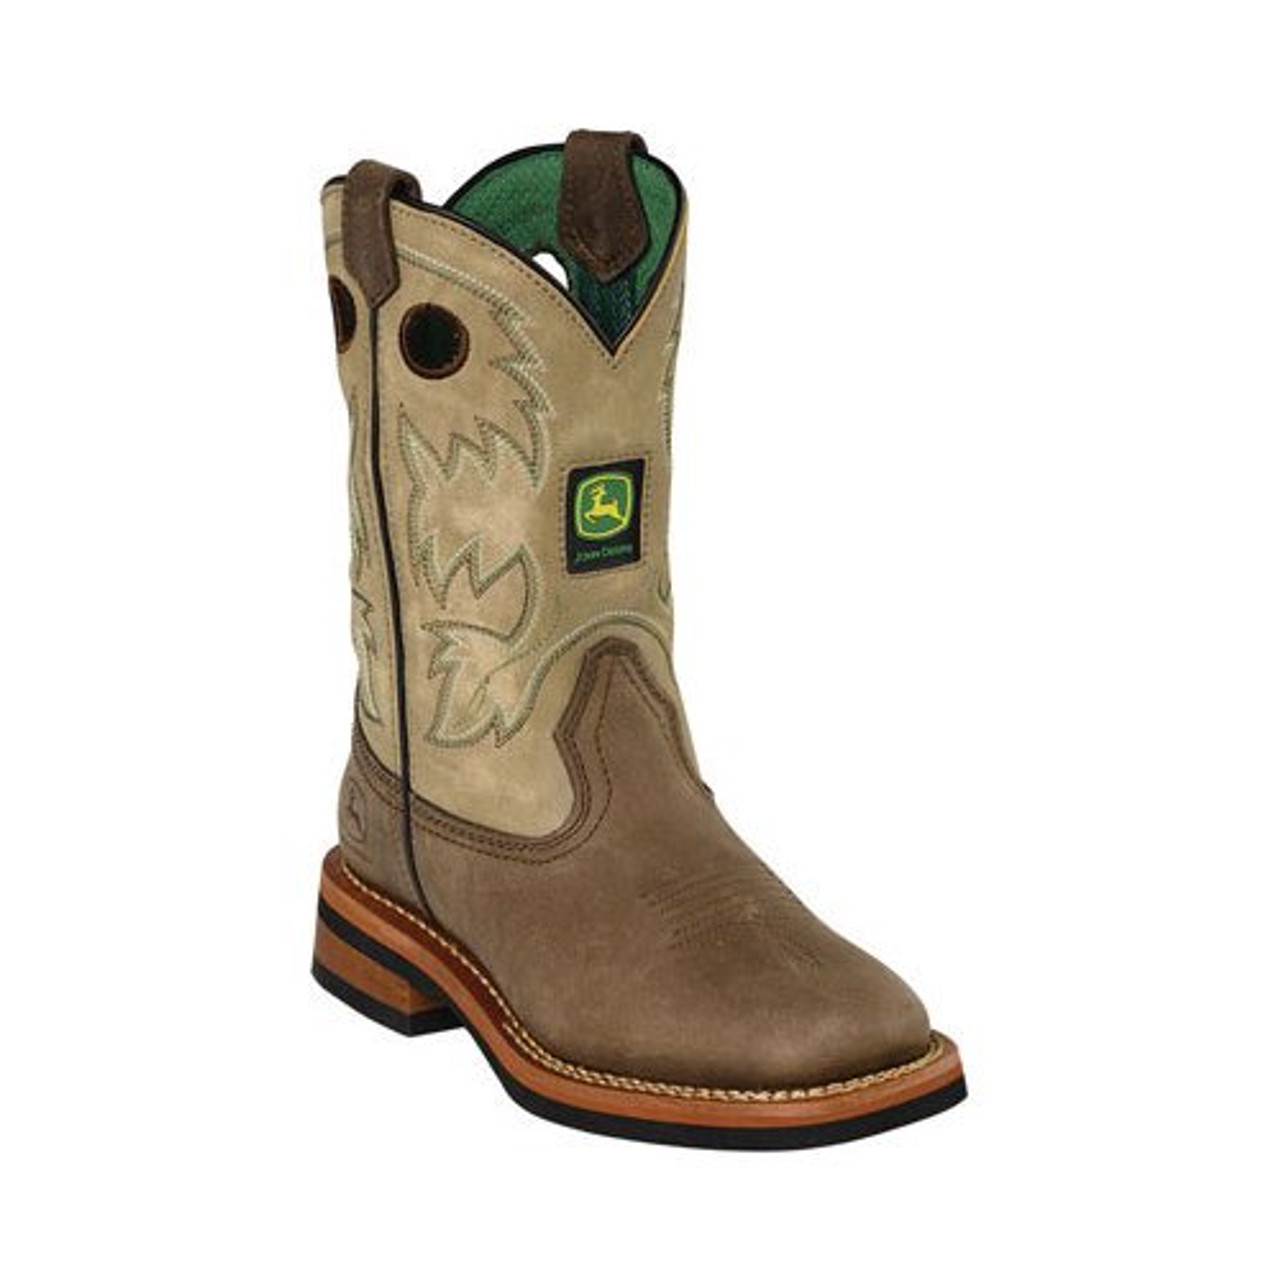 Buy > john deere boots steel toe > in stock